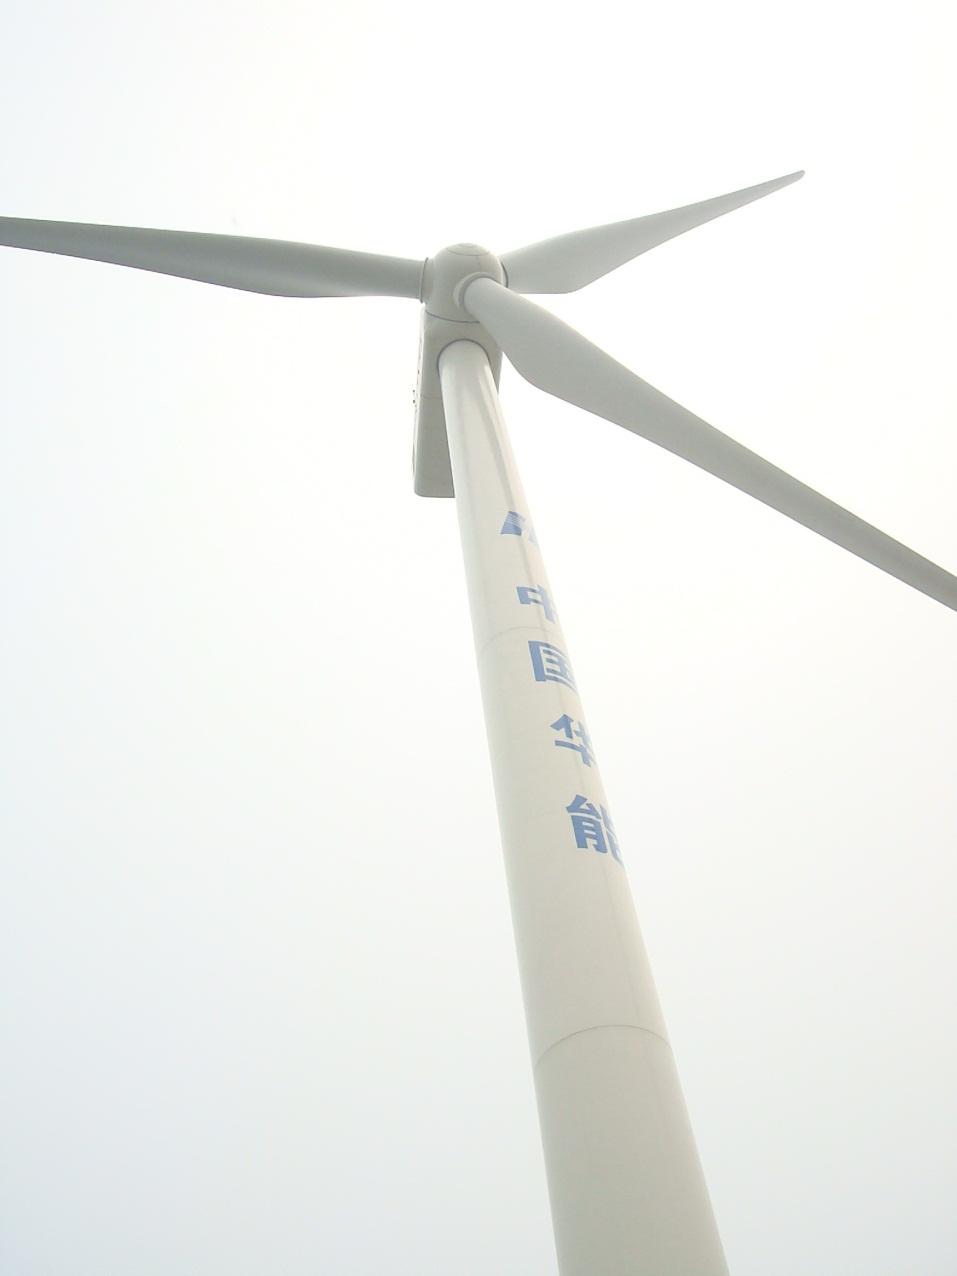 Turbine Selection Sinovel SL3000/113 turbine 3MW turbine